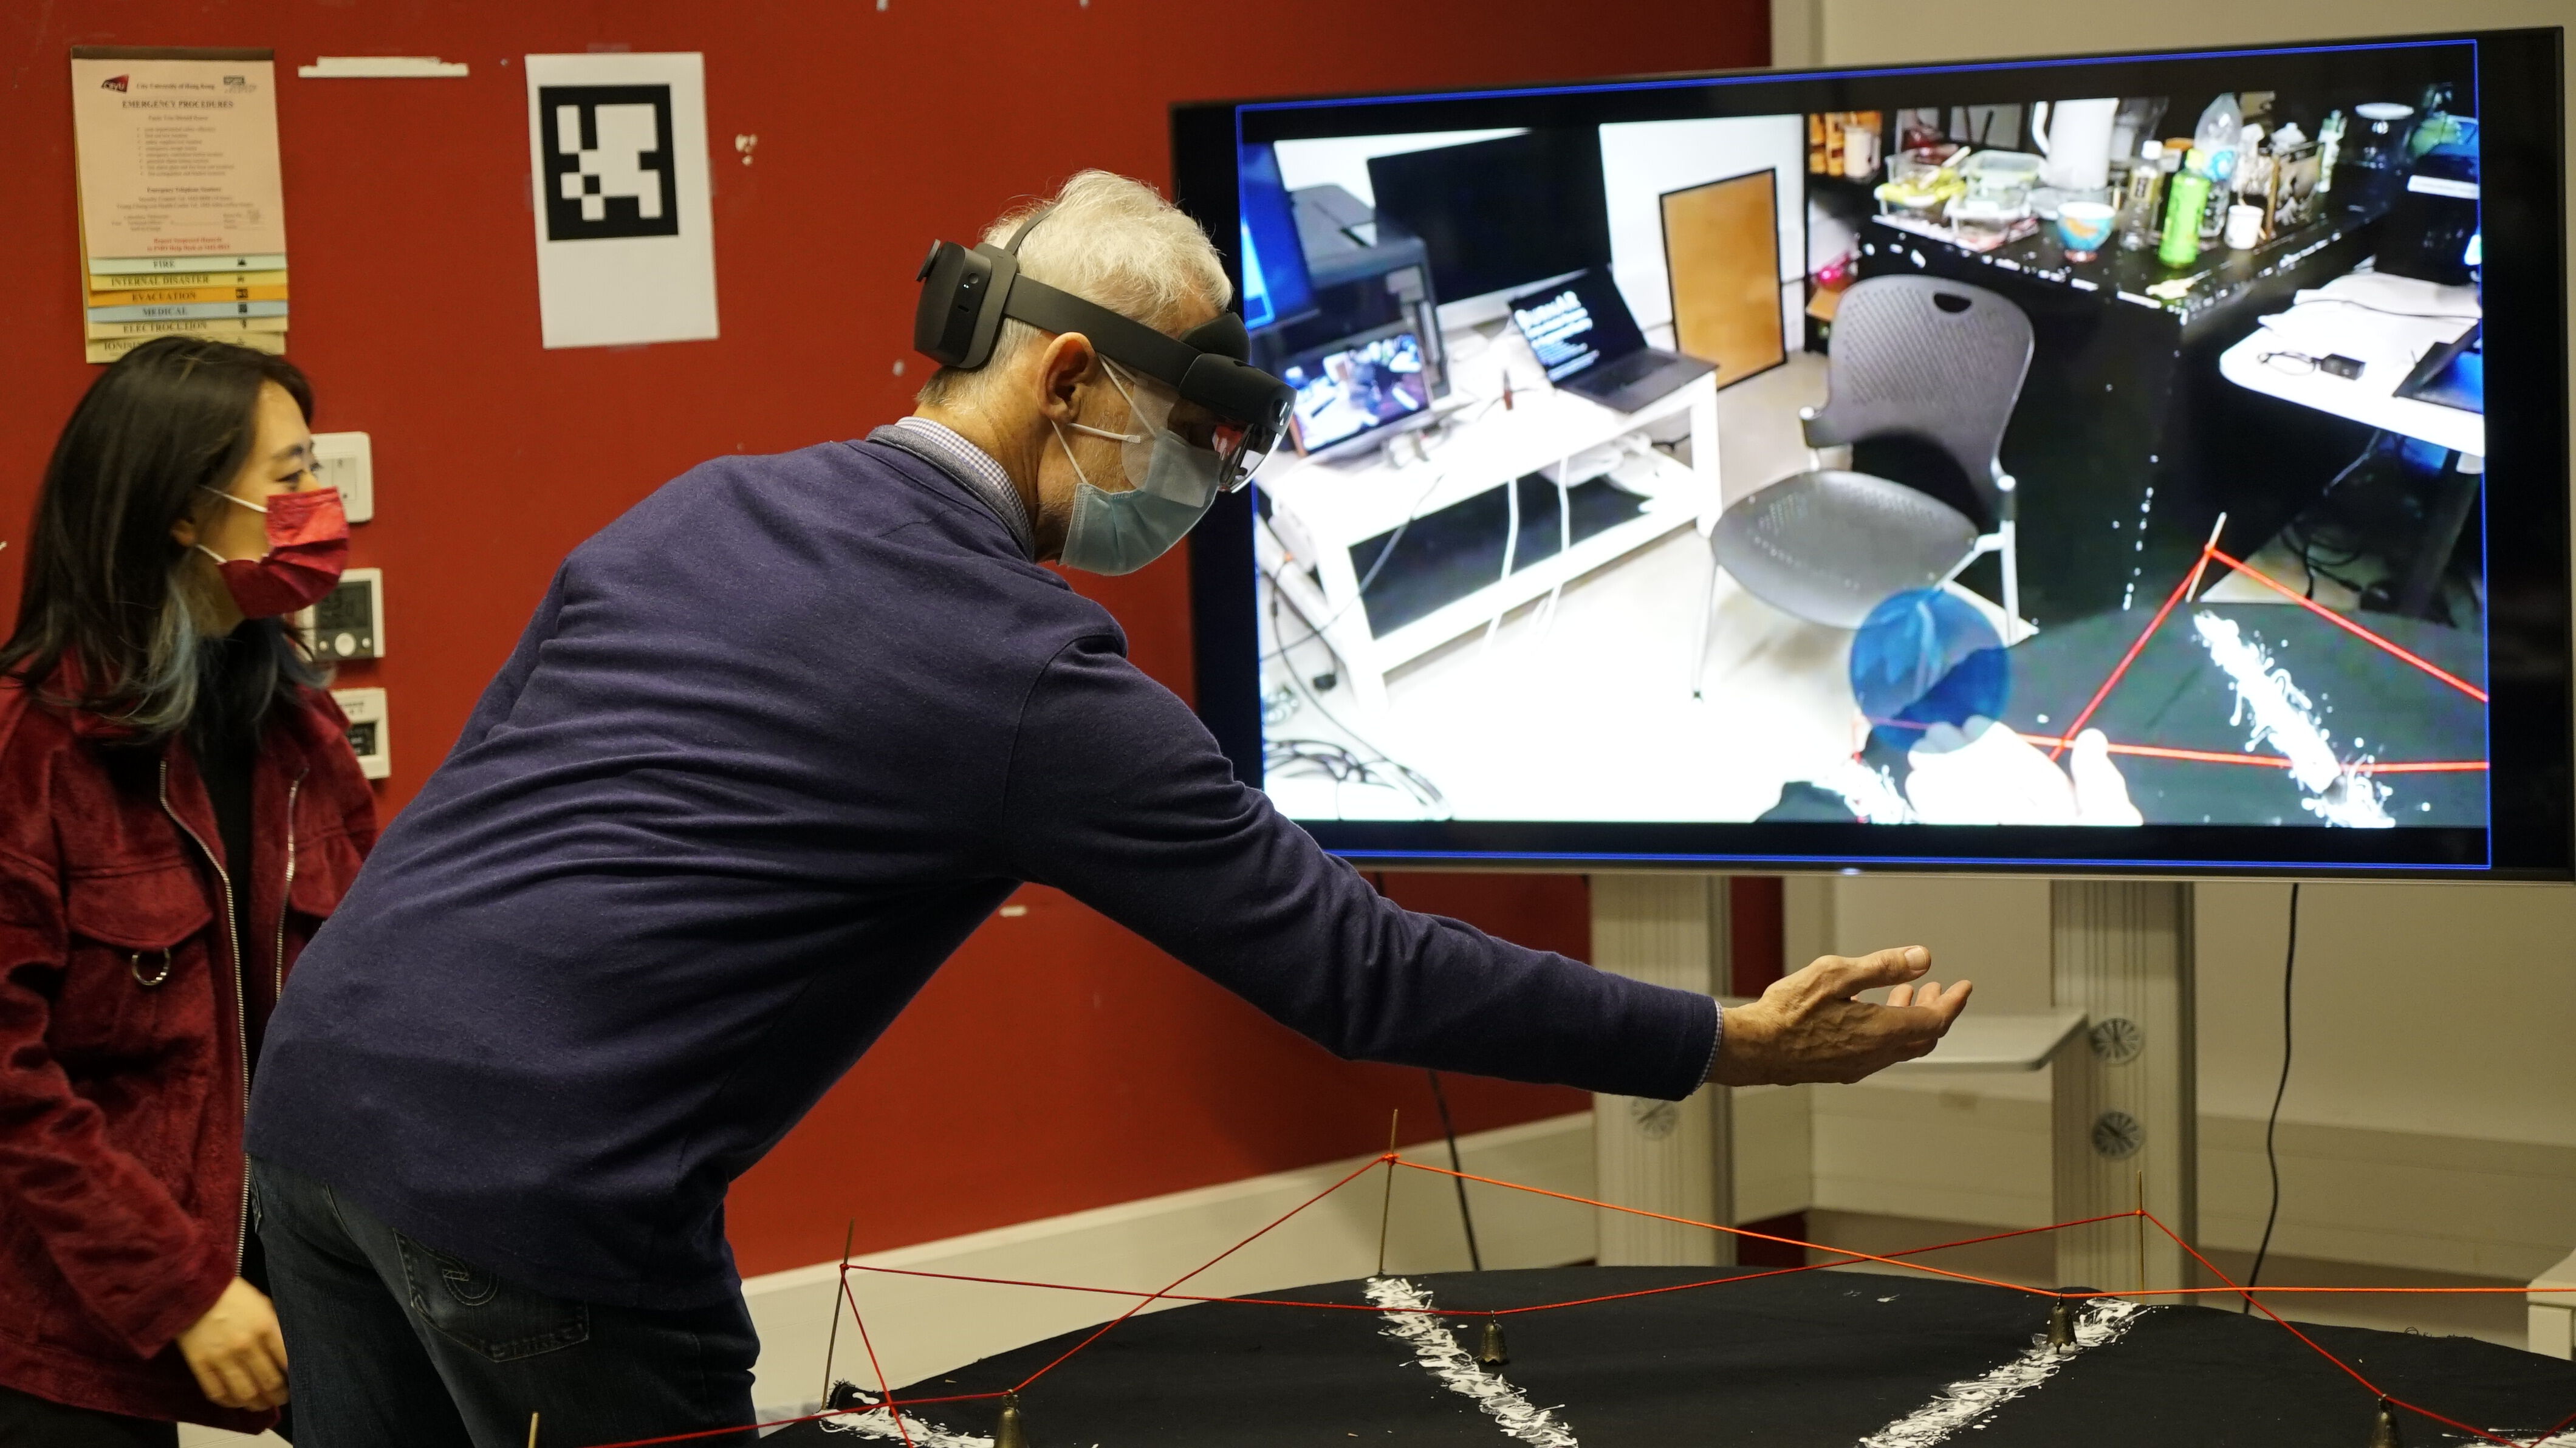  Prof. Robert Ransom (Head, Department of Neuroscience) investigates Chang Liu’s demo Interactive AR Storytelling.